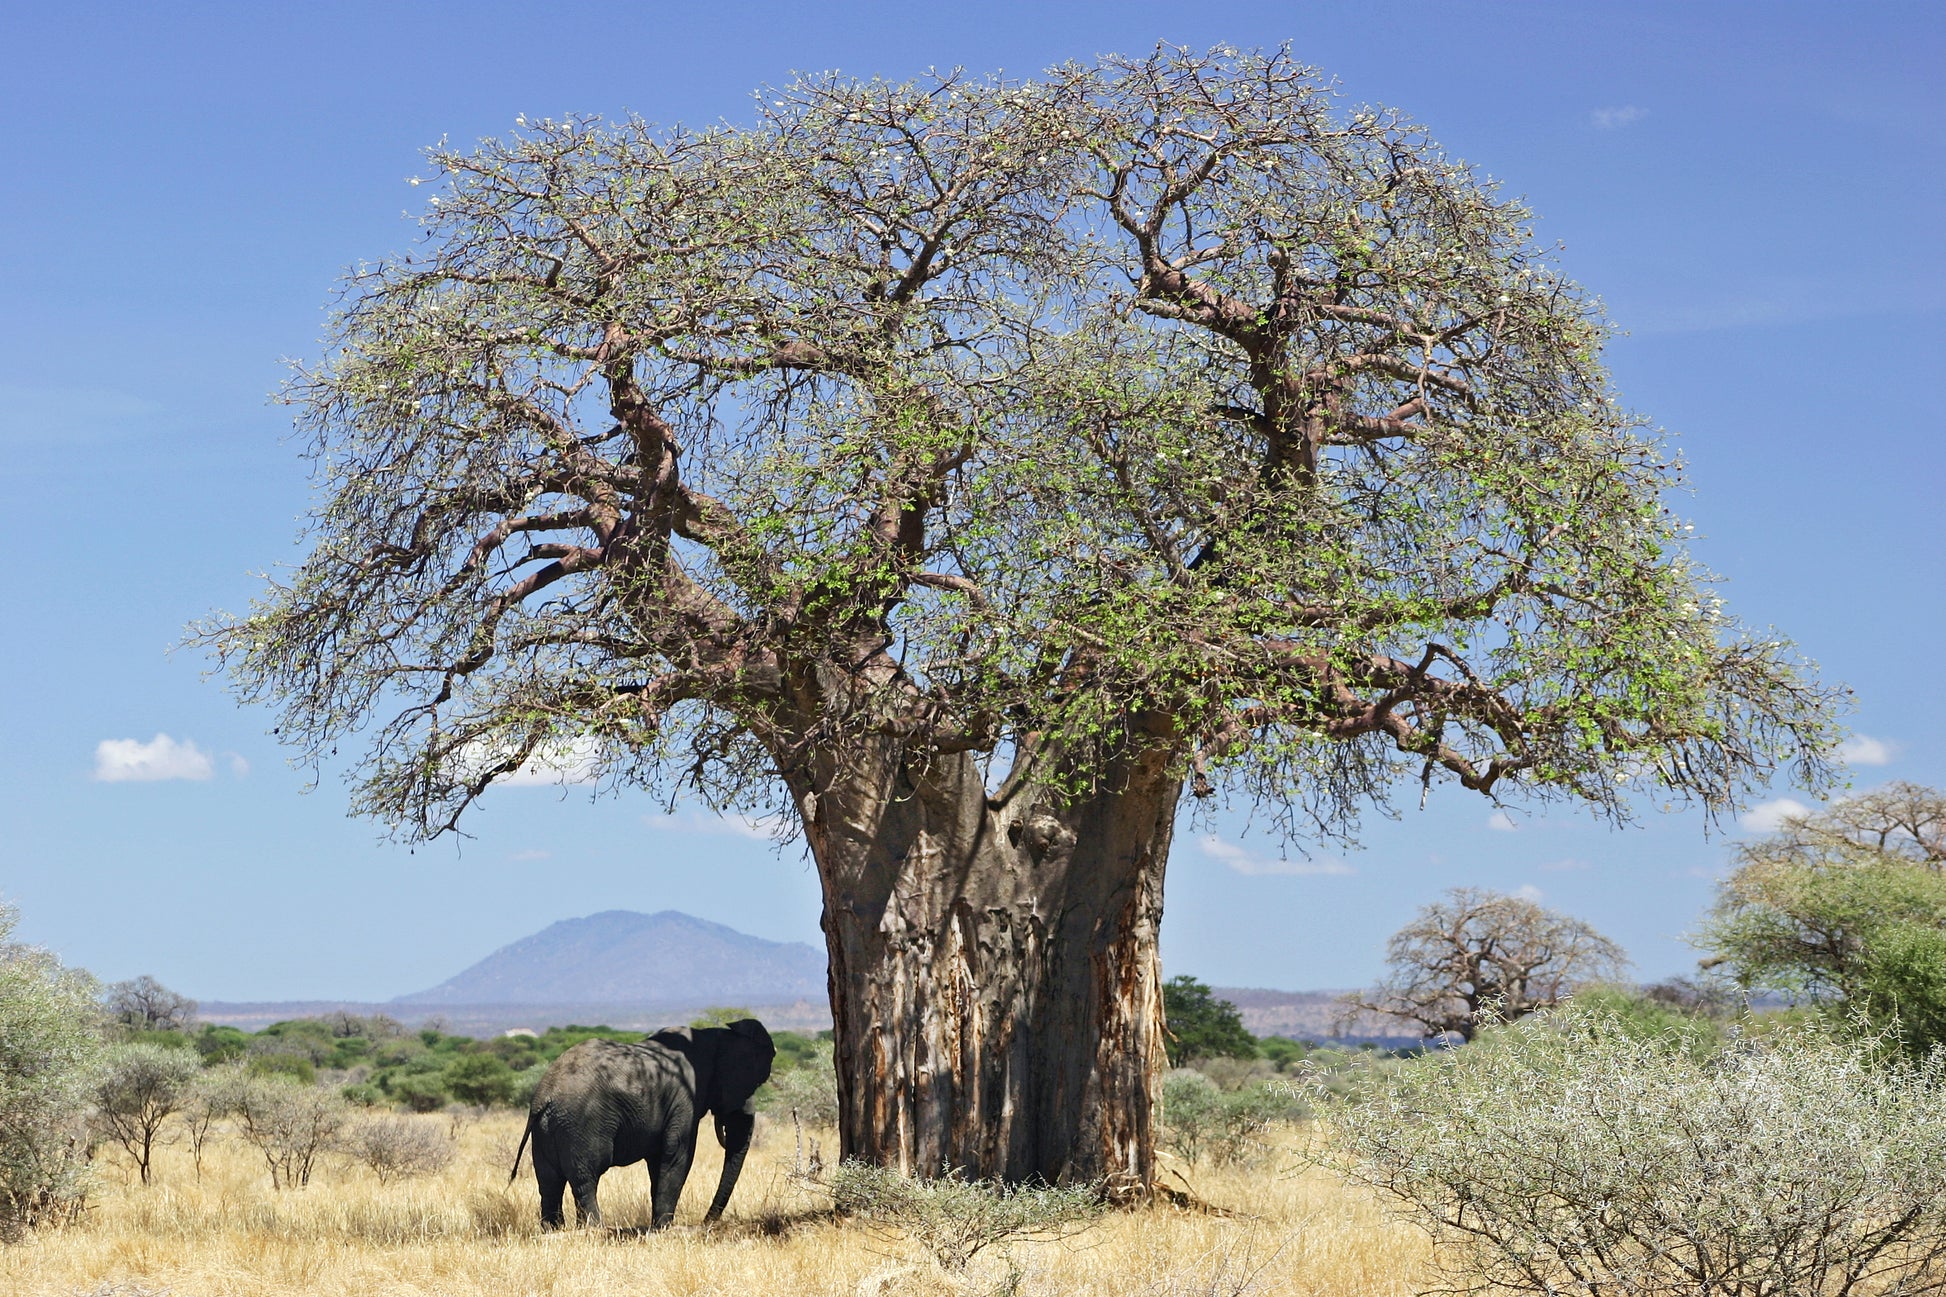 Stort Baobabtræ (Adansonia digitata) med en elefant i dens skygge